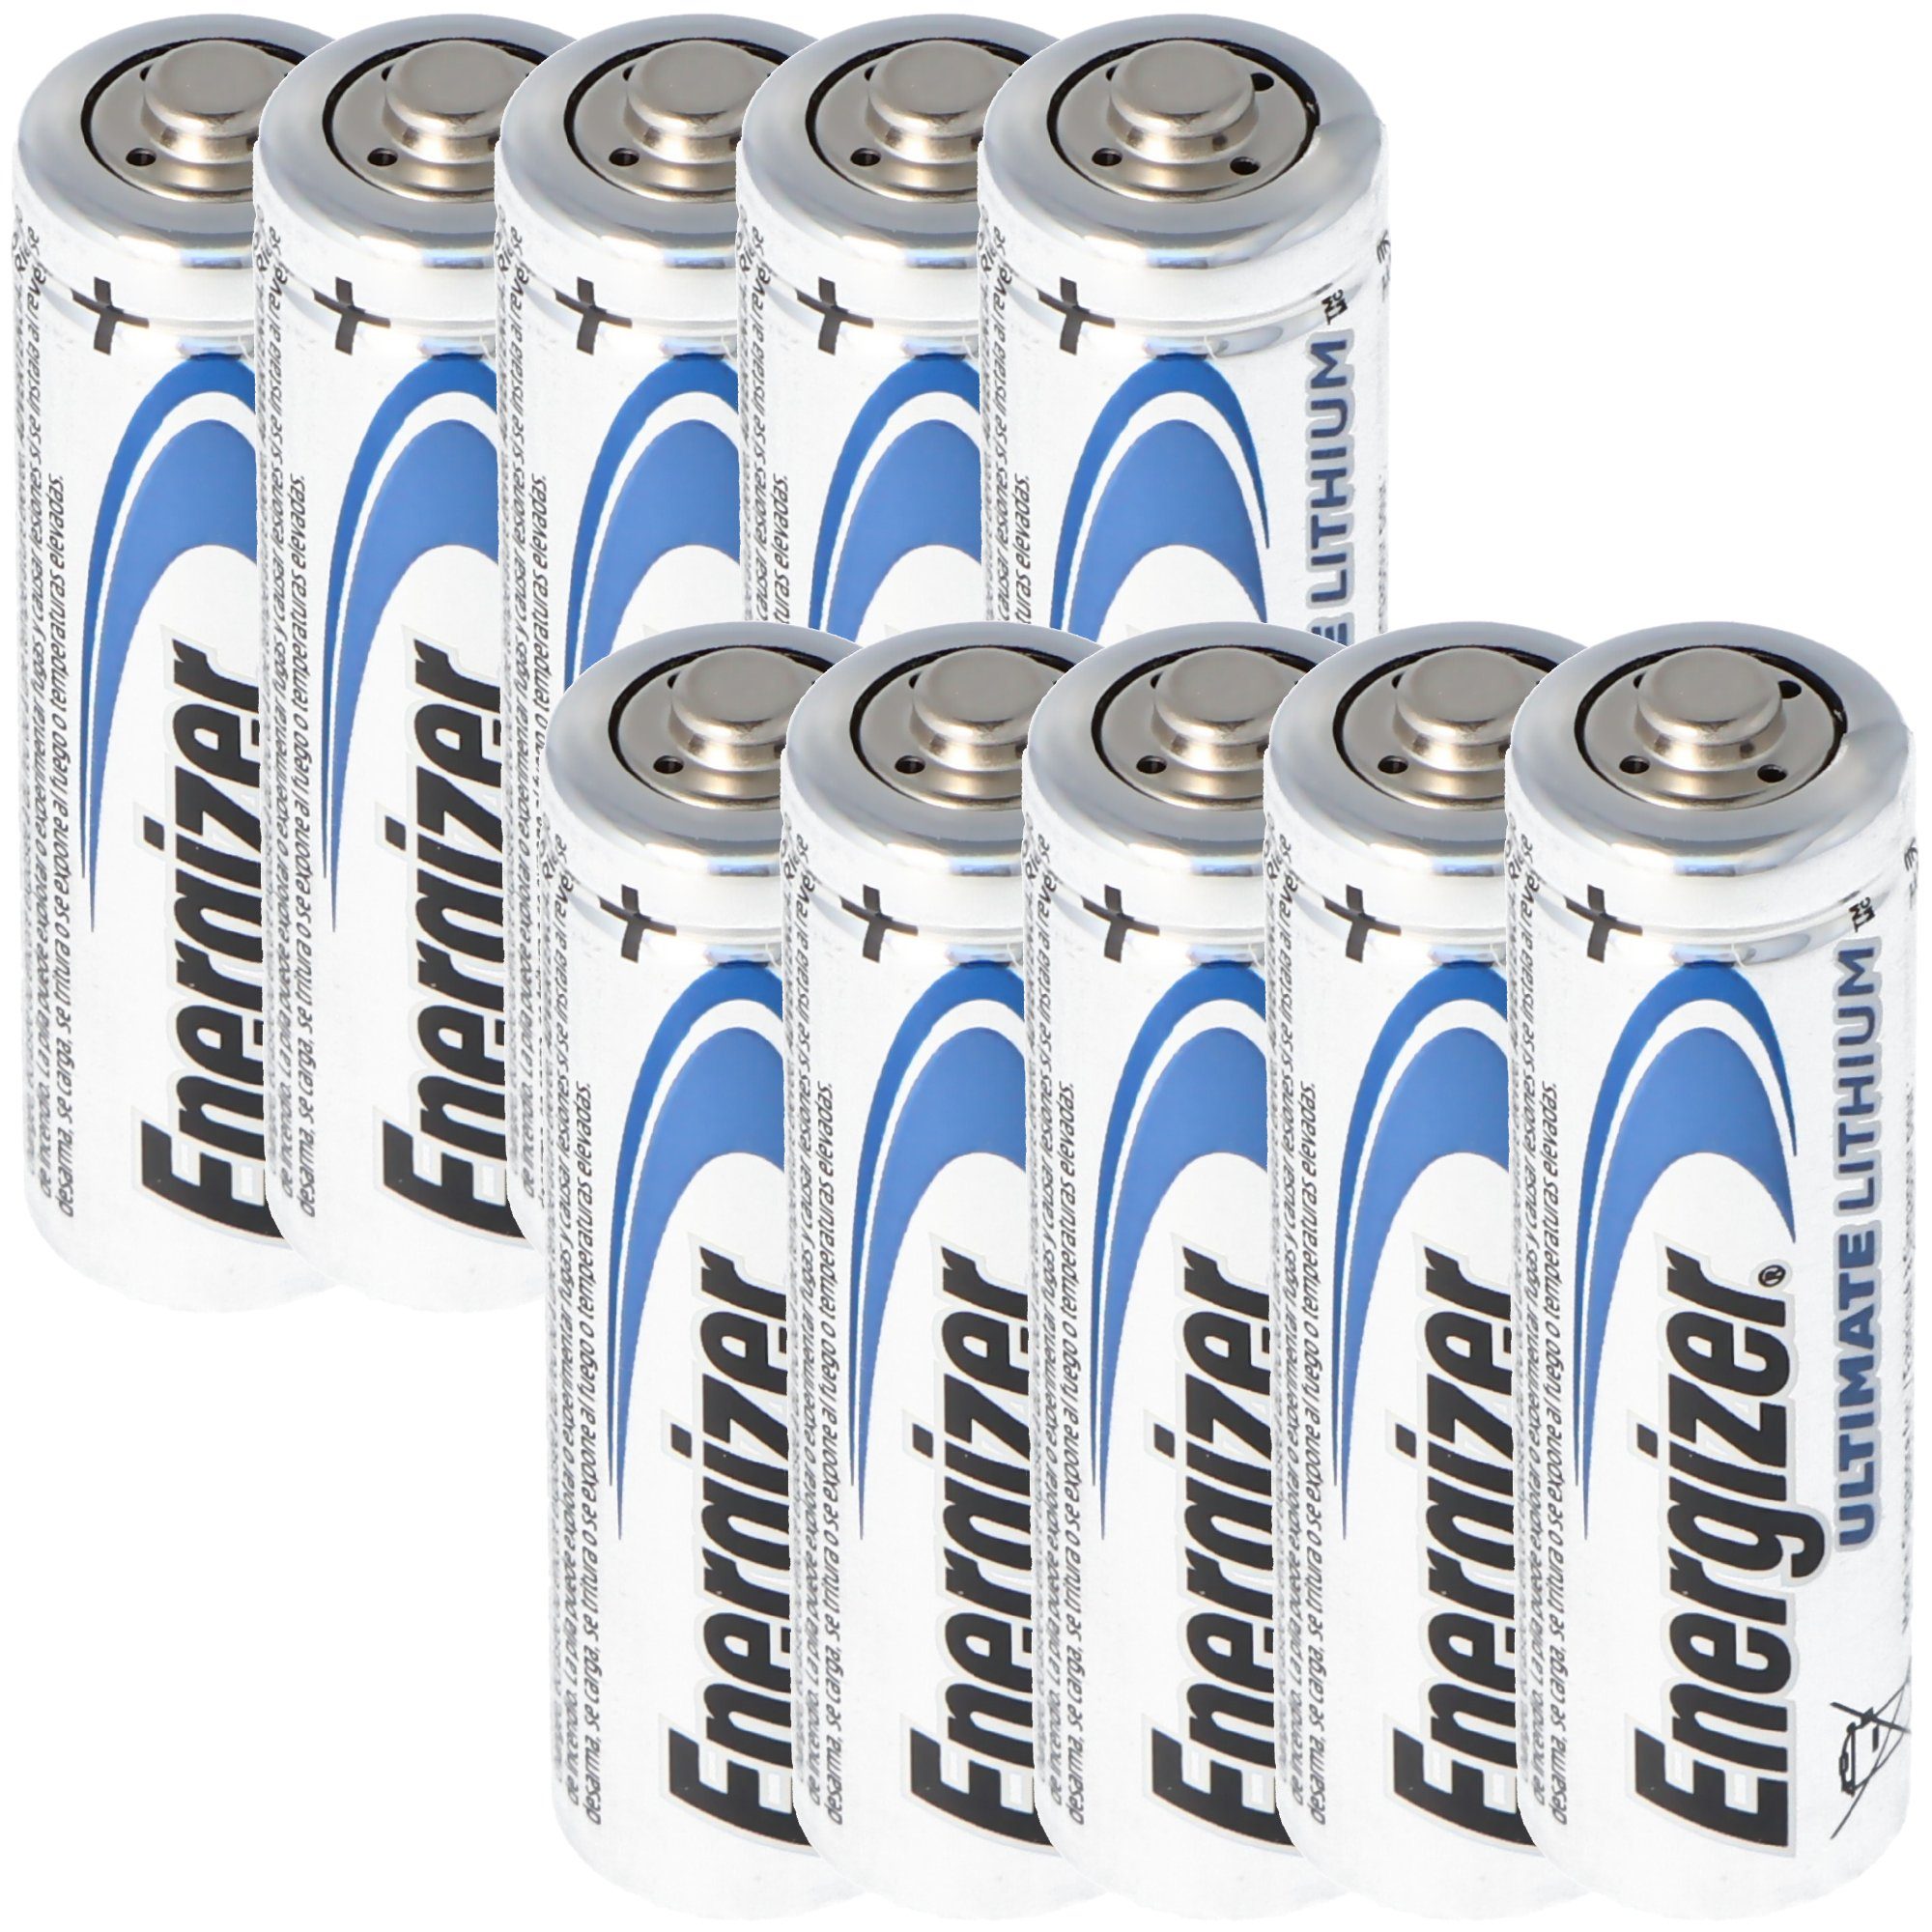 Energizer Energizer Ultimate Lithium Batterie 10er Box Energizer AA Batterie 1, Batterie, (1,5 V) | Batterien